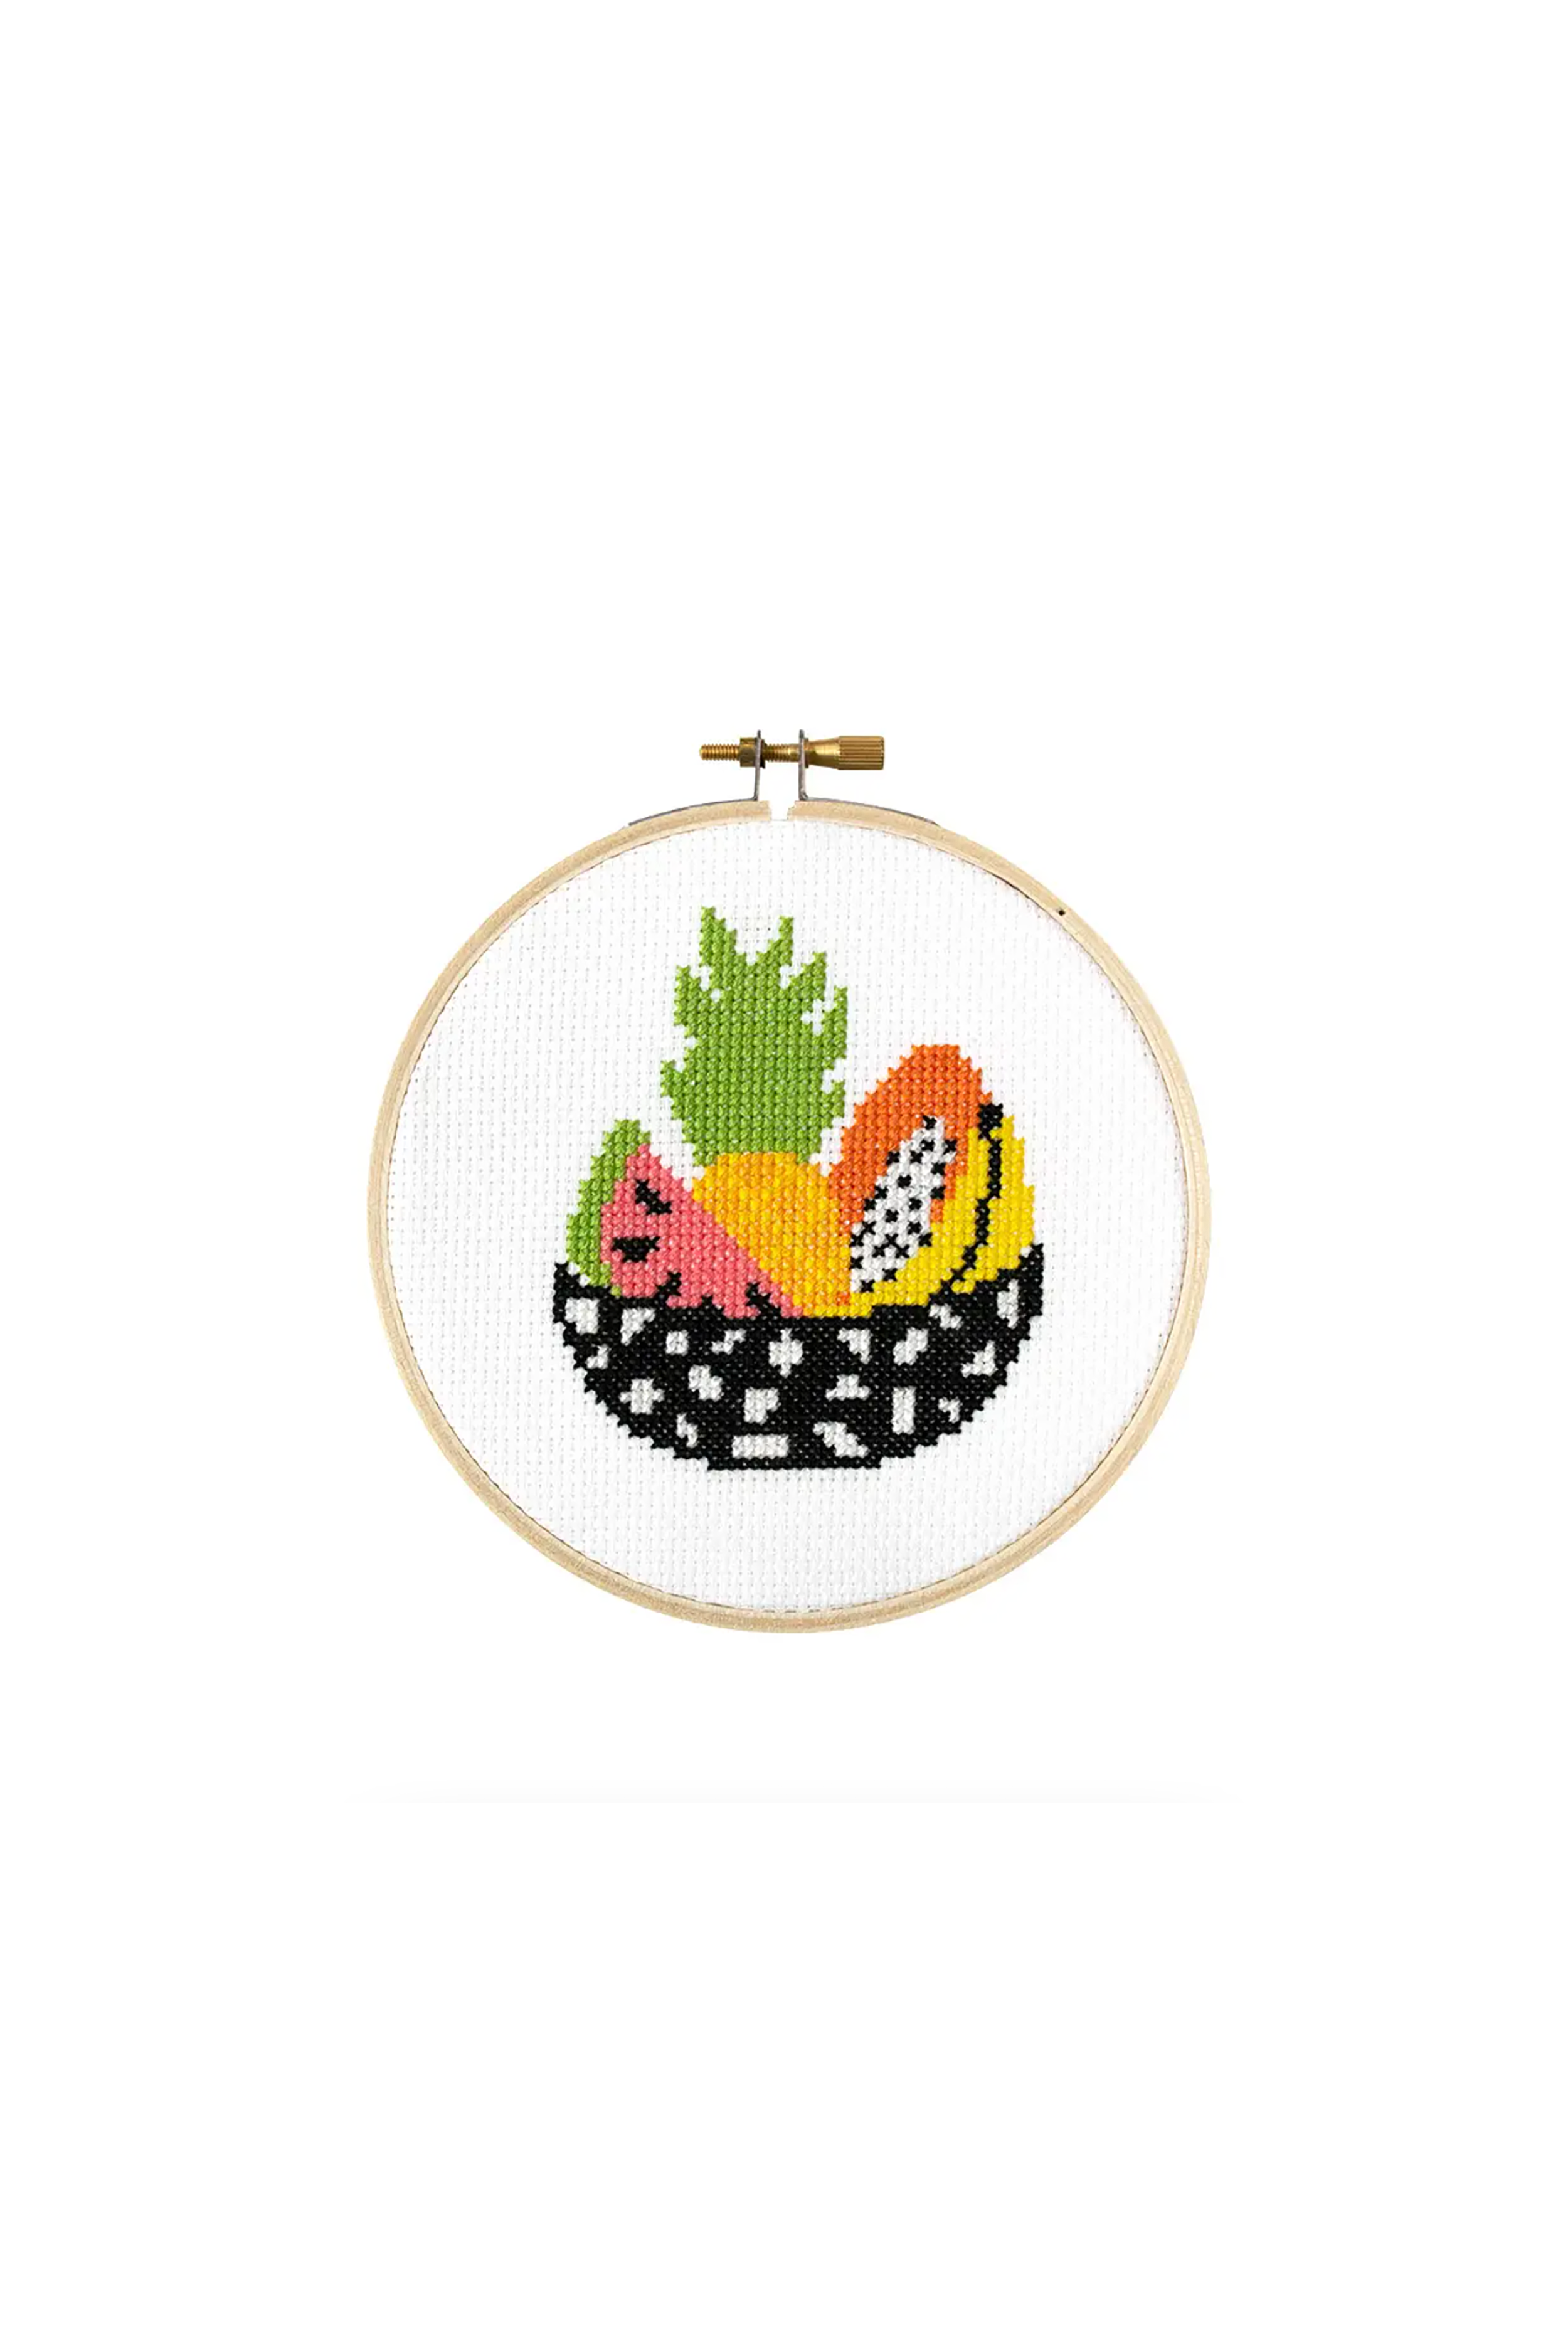 Fruit Bowl DIY Cross Stitch Kit